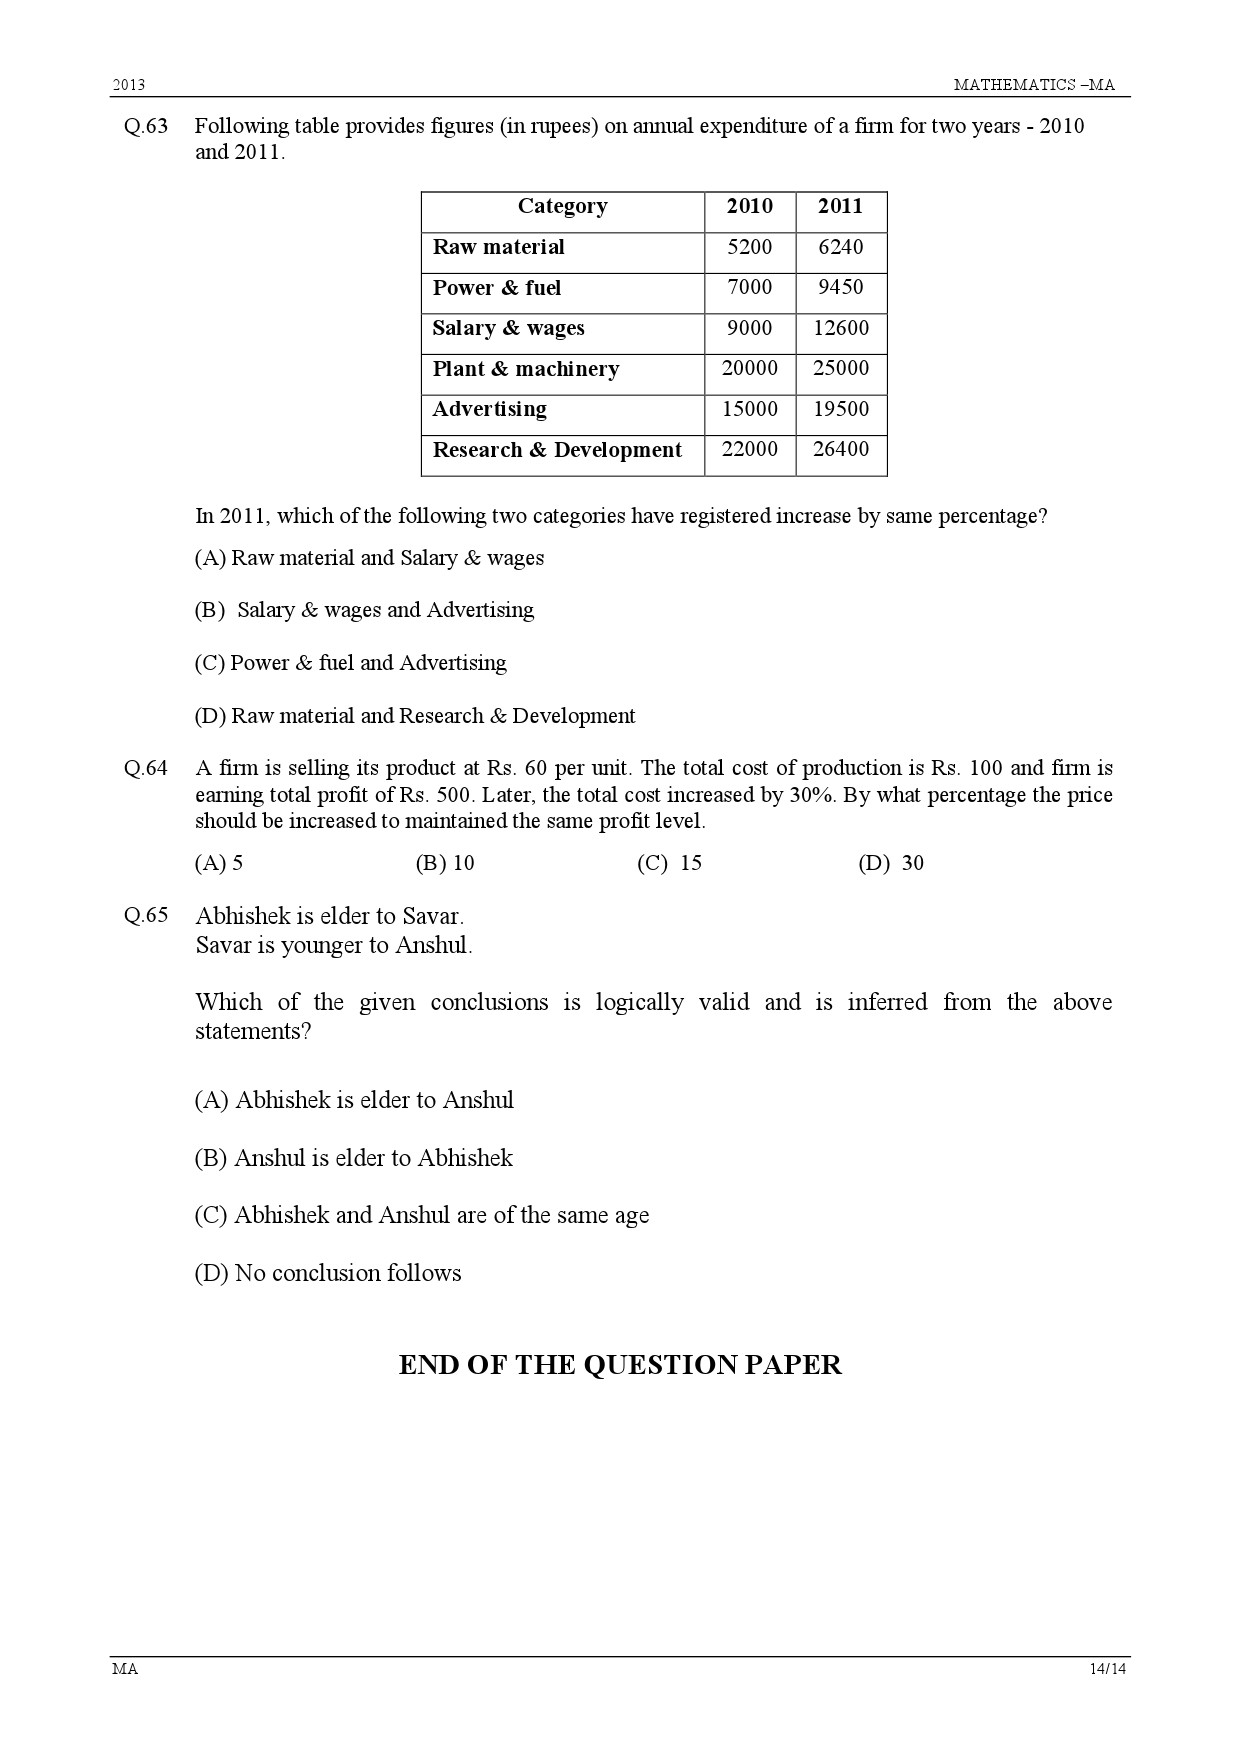 GATE Exam Question Paper 2013 Mathematics 14